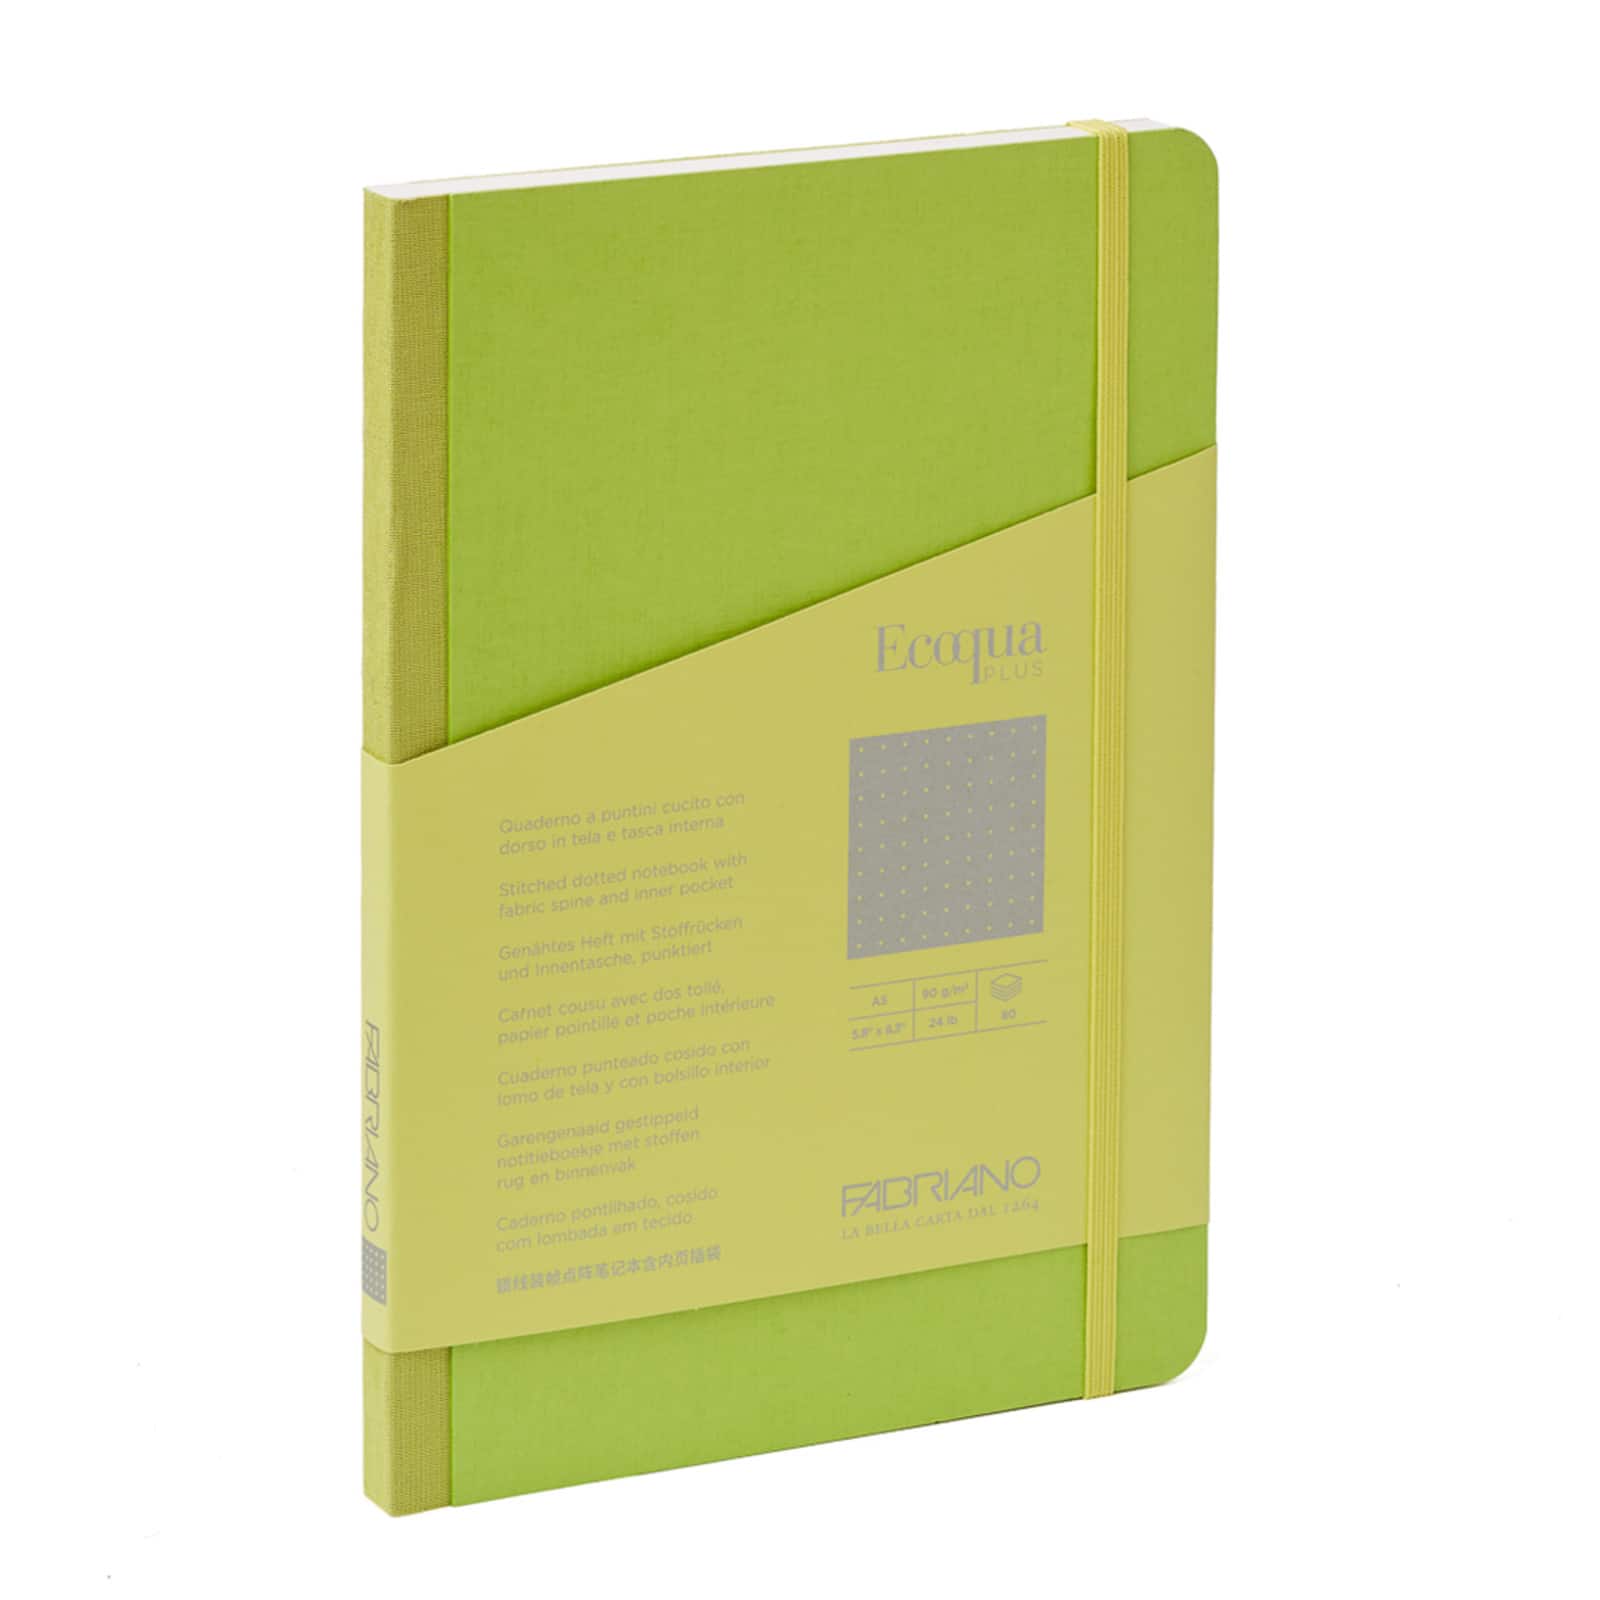 Fabriano® Ecoqua Plus A5 Dotted Fabric-Bound Notebook